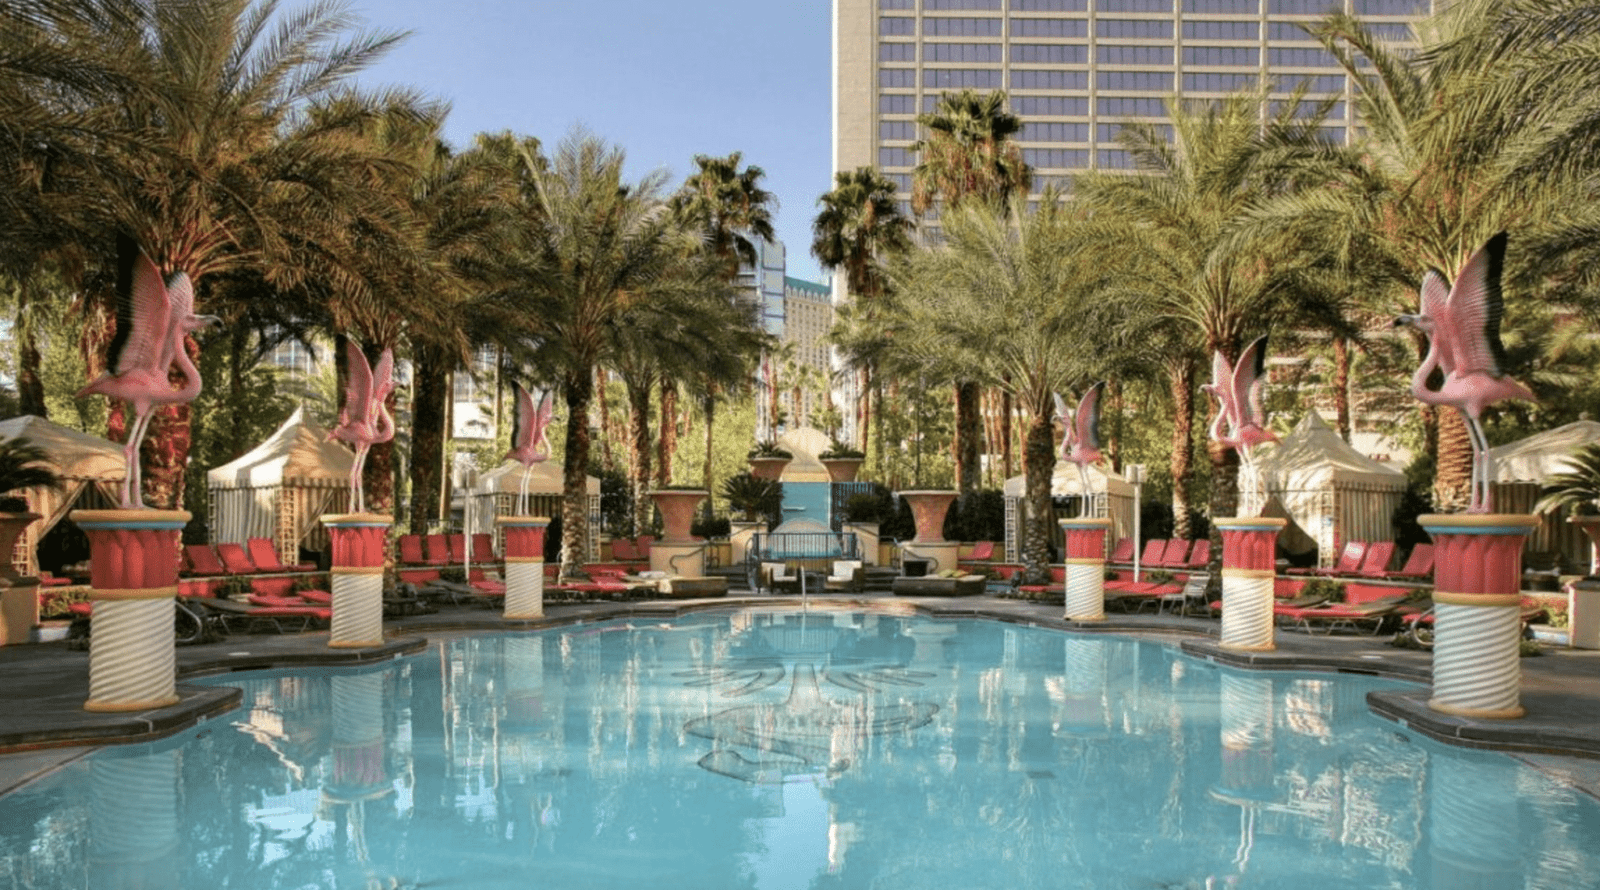 The Flamingo Vegas Pools for Families